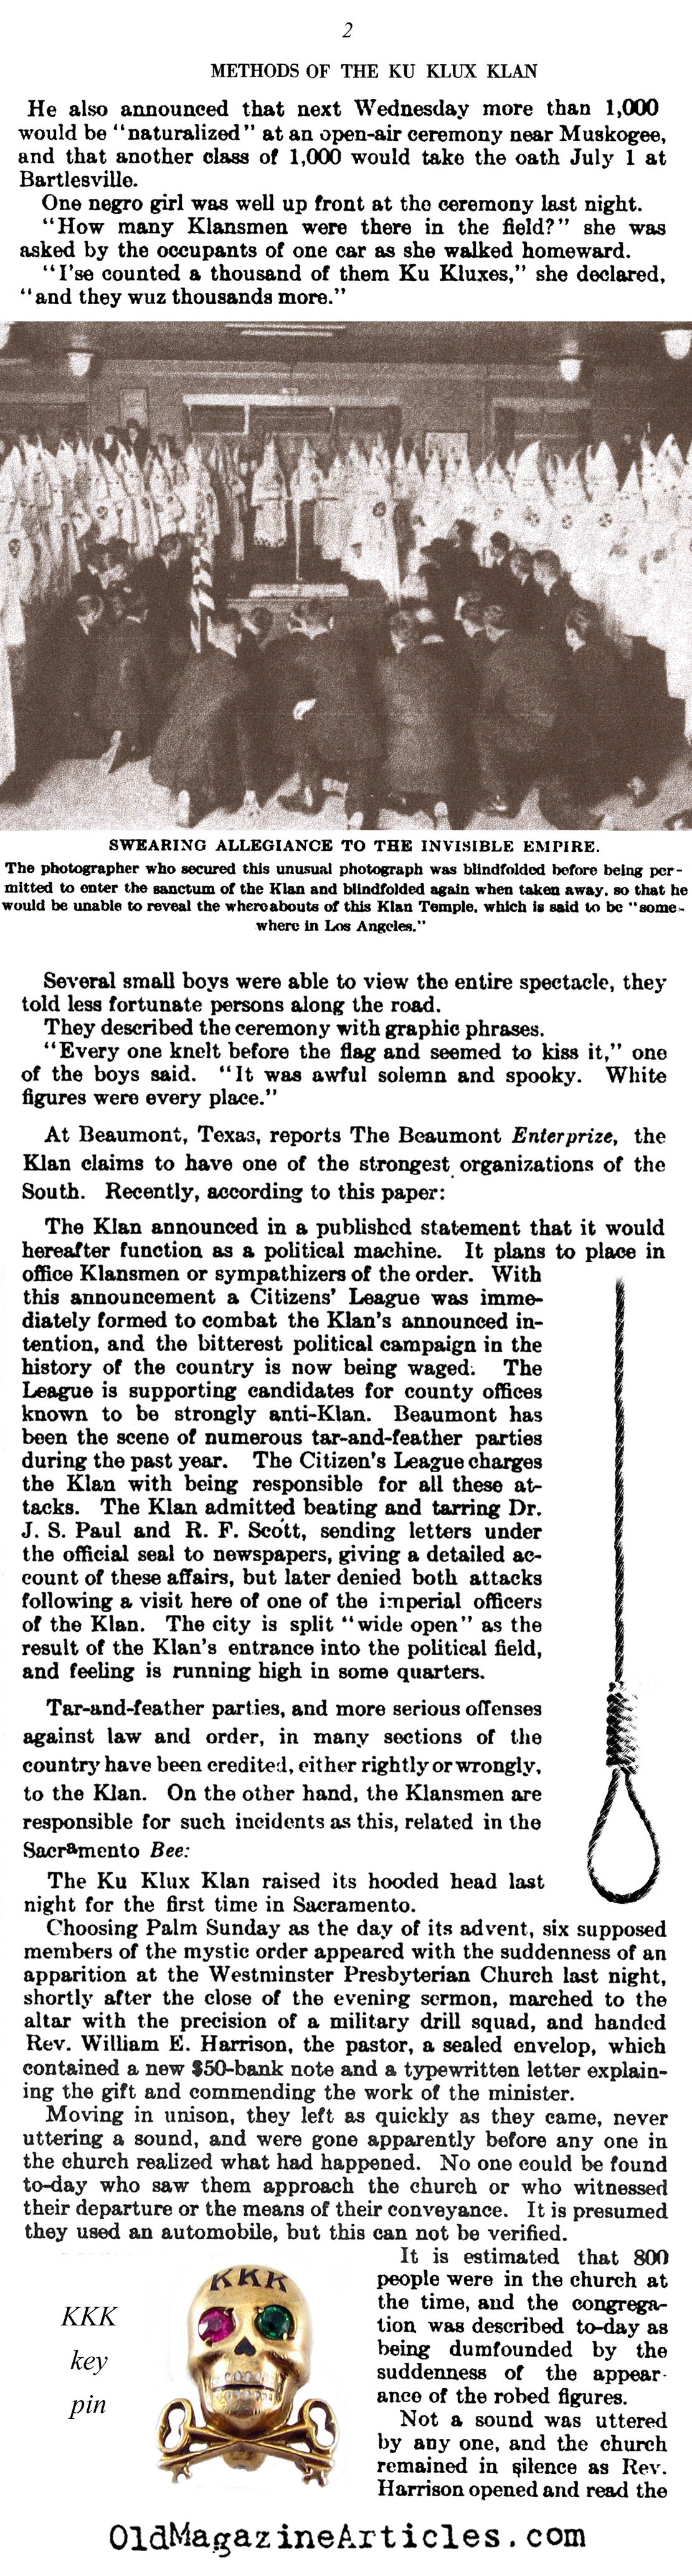 Klan Methods and Customs (Literary Digest, 1922)